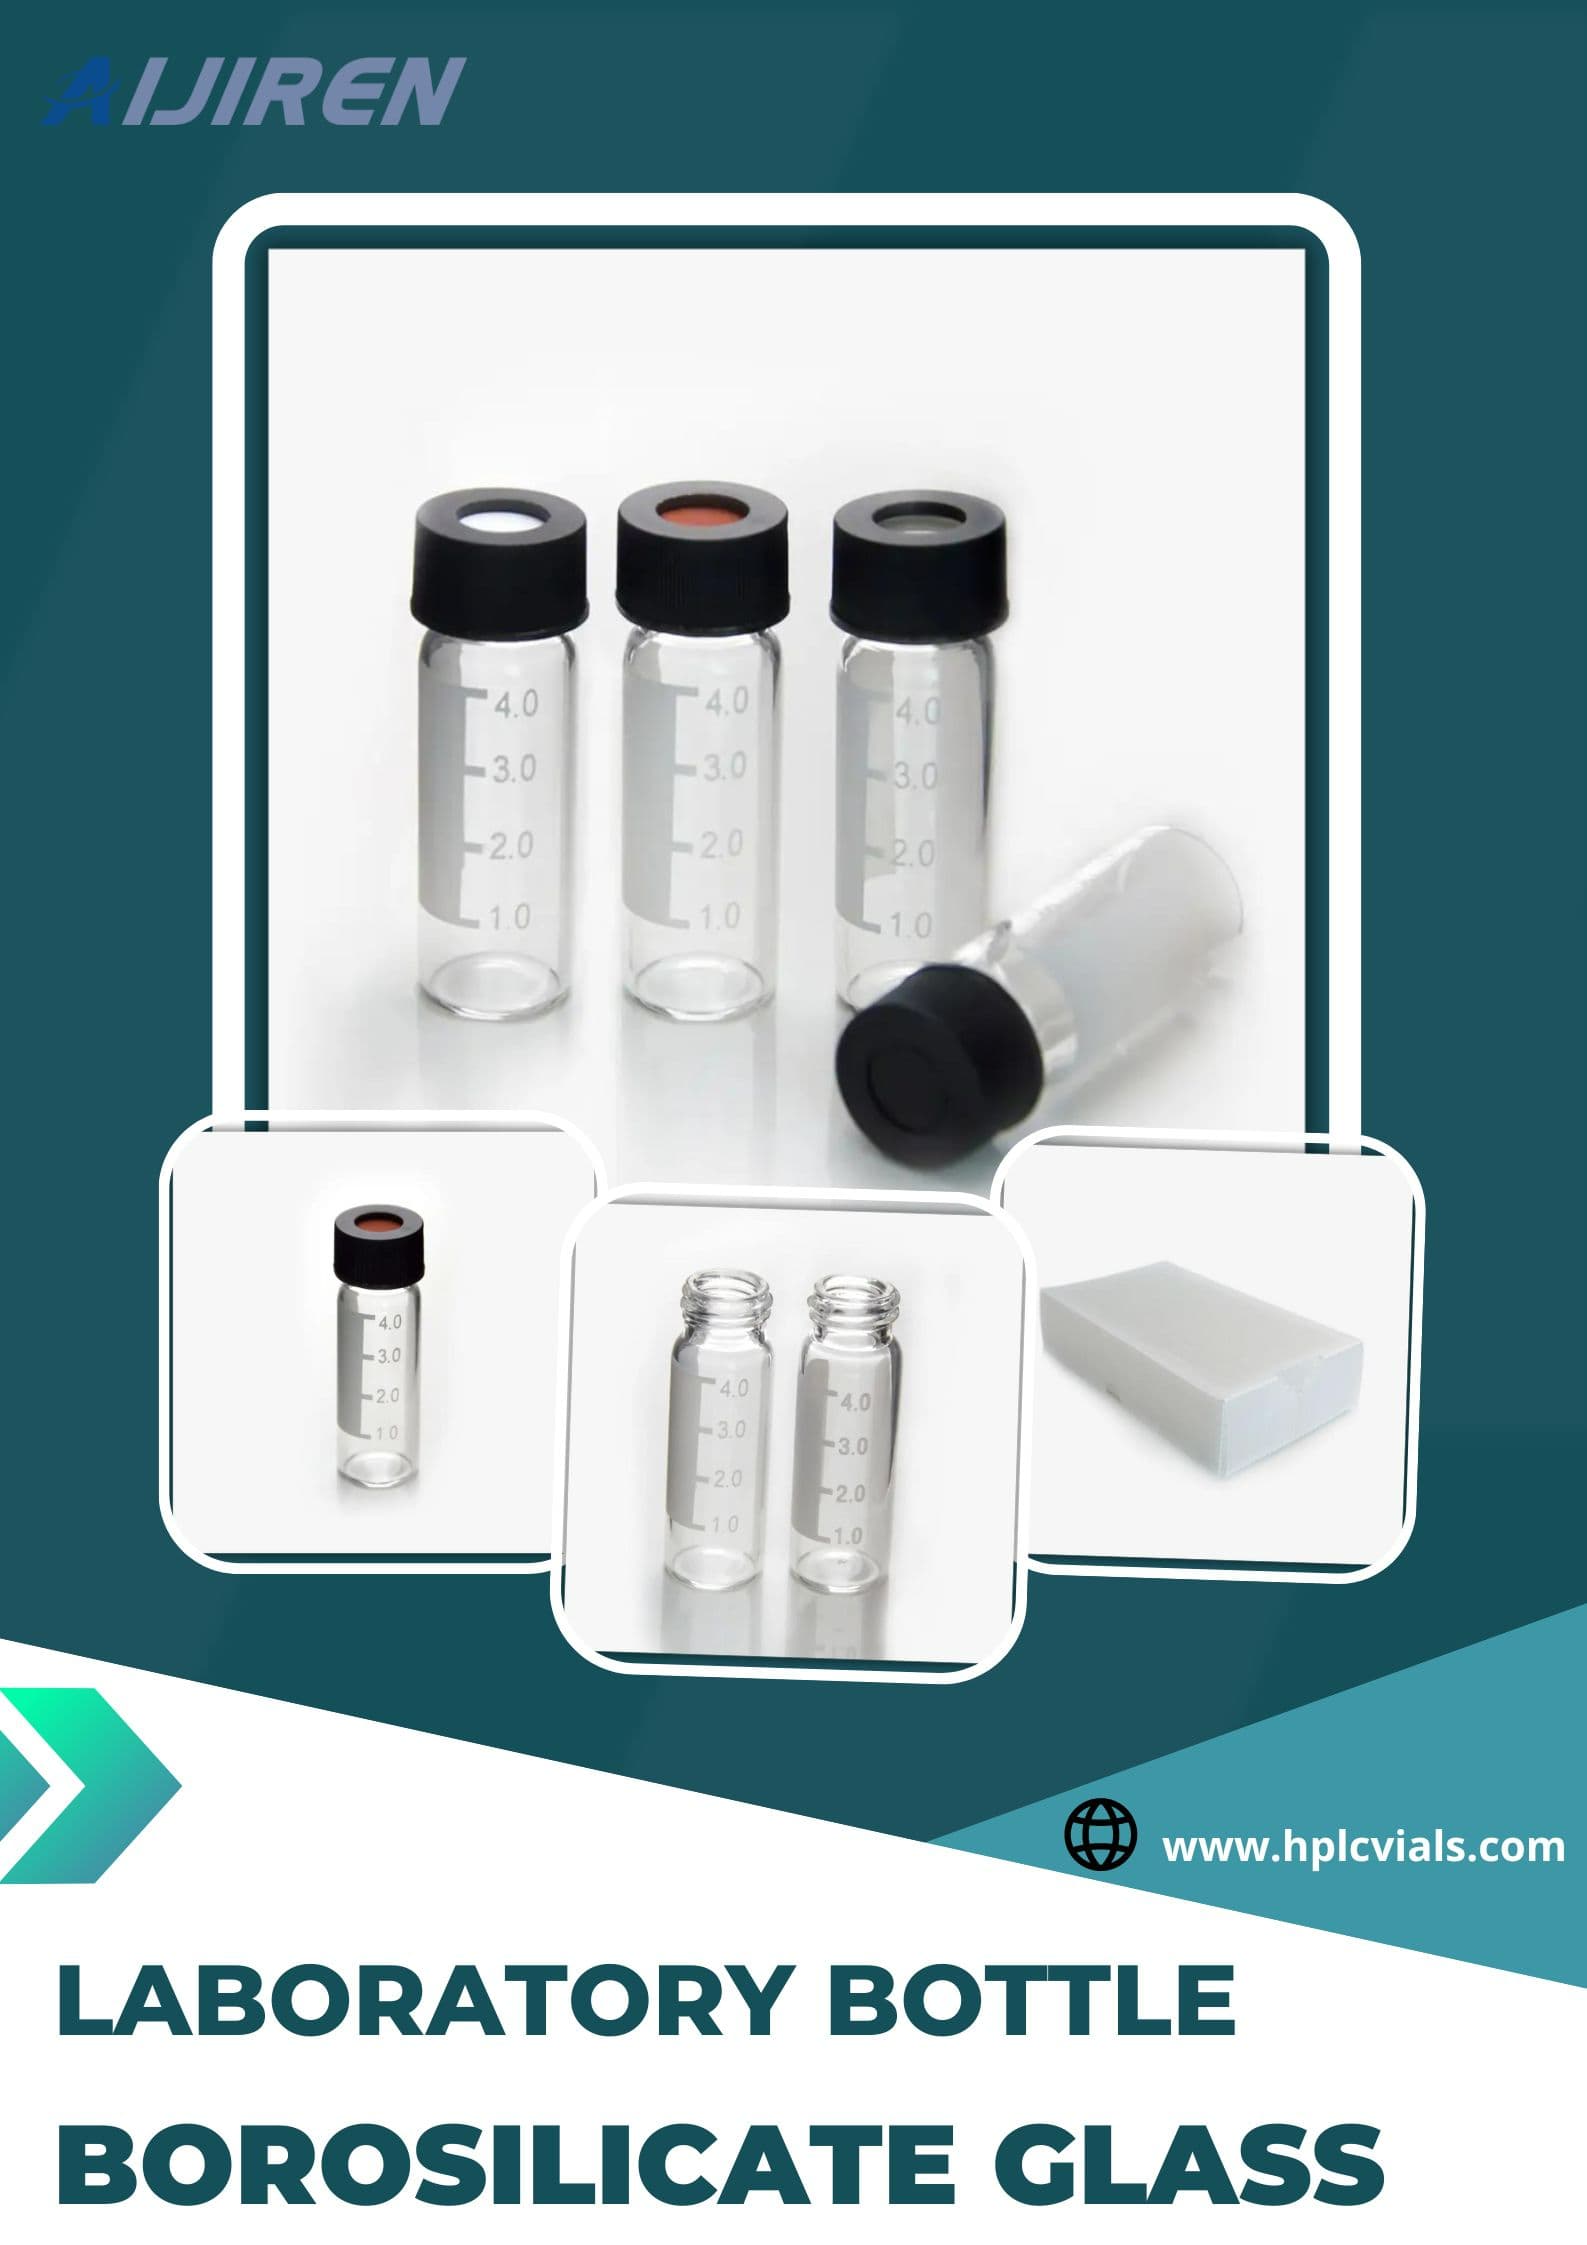 20ml headspace vial4ml amber, clear, customerized laboratory glass Borosilicate glass vial